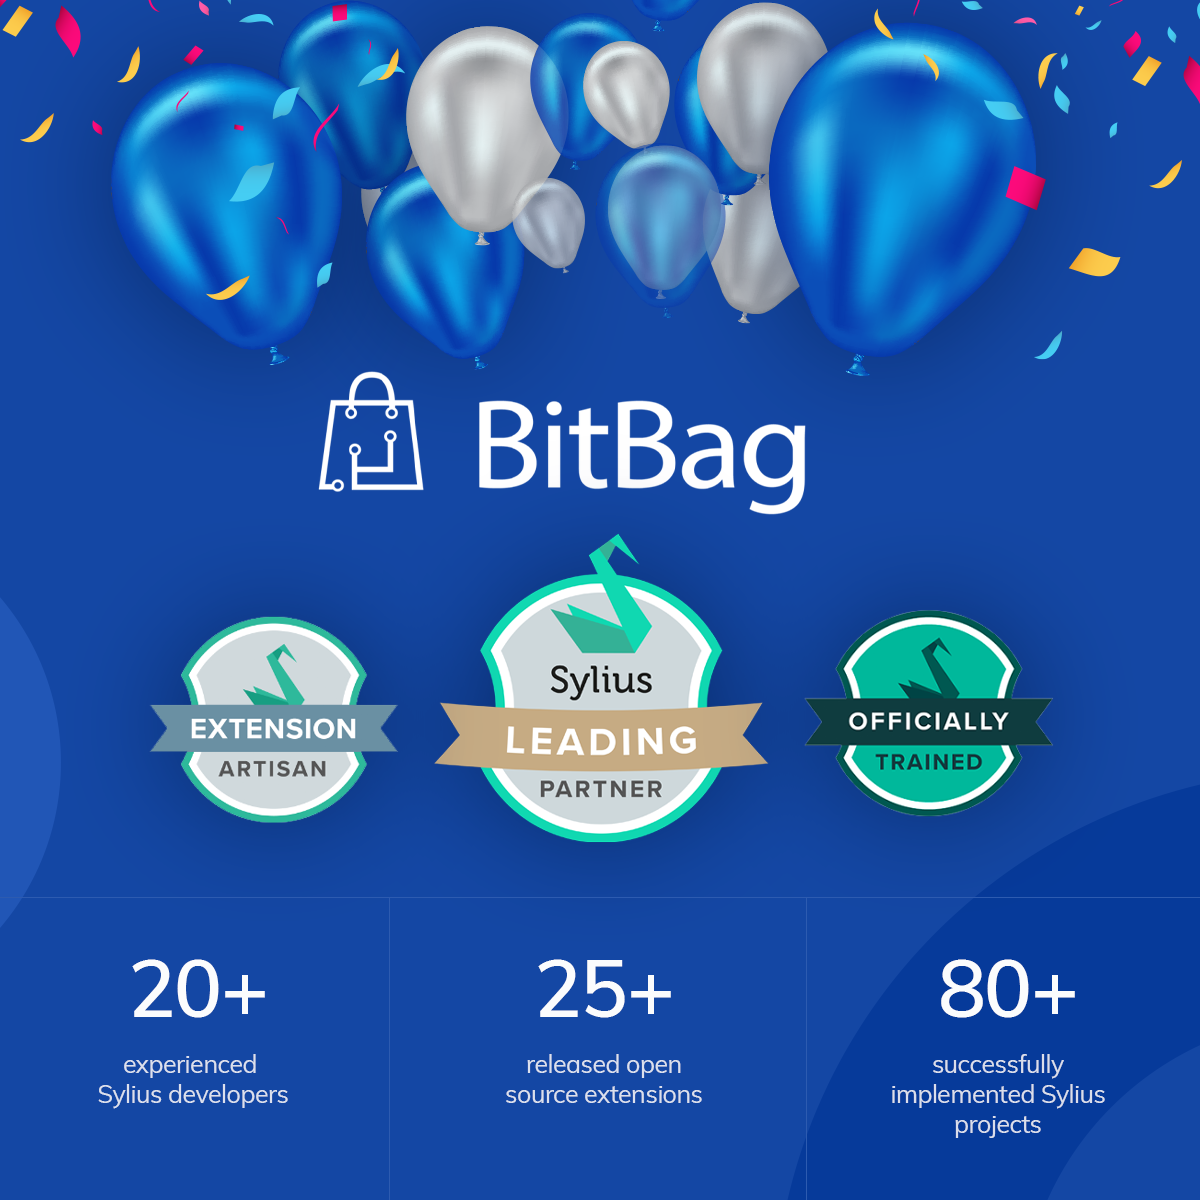 bitbag-sylius-leading-partner